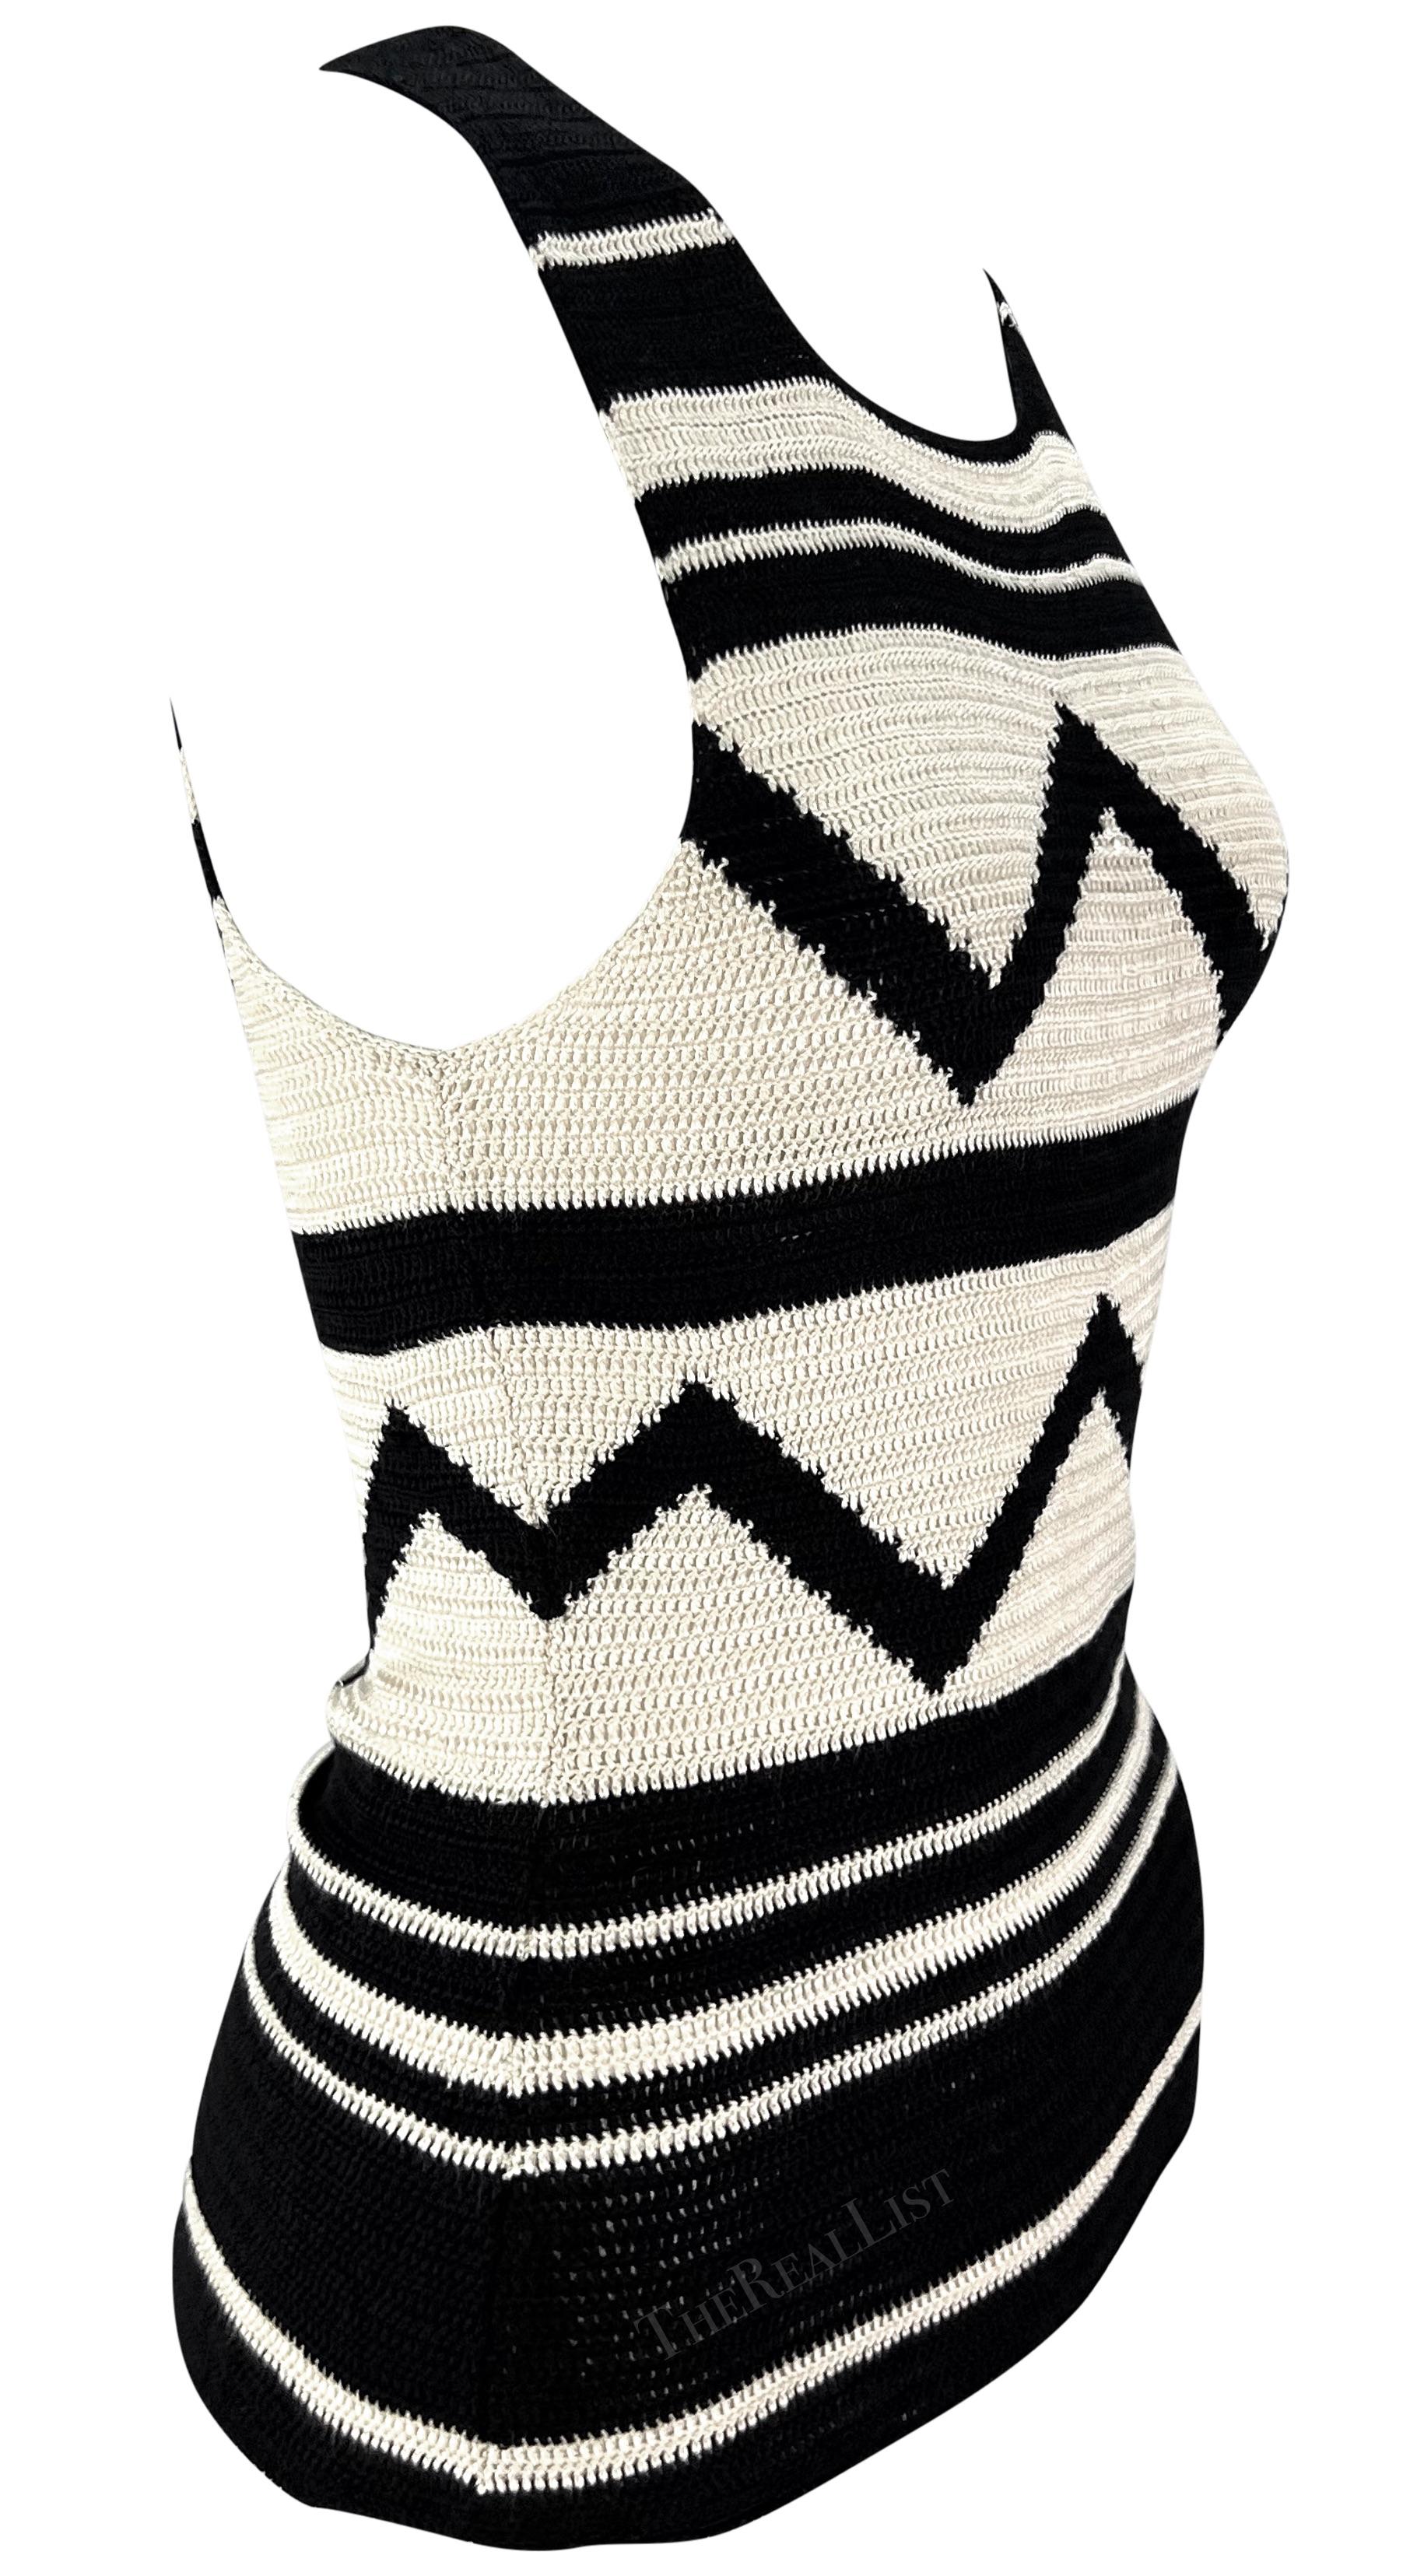 S/S 2001 Ralph Lauren Runway Creme Black Geometric Sheer Knit Silk Sweater Top For Sale 6